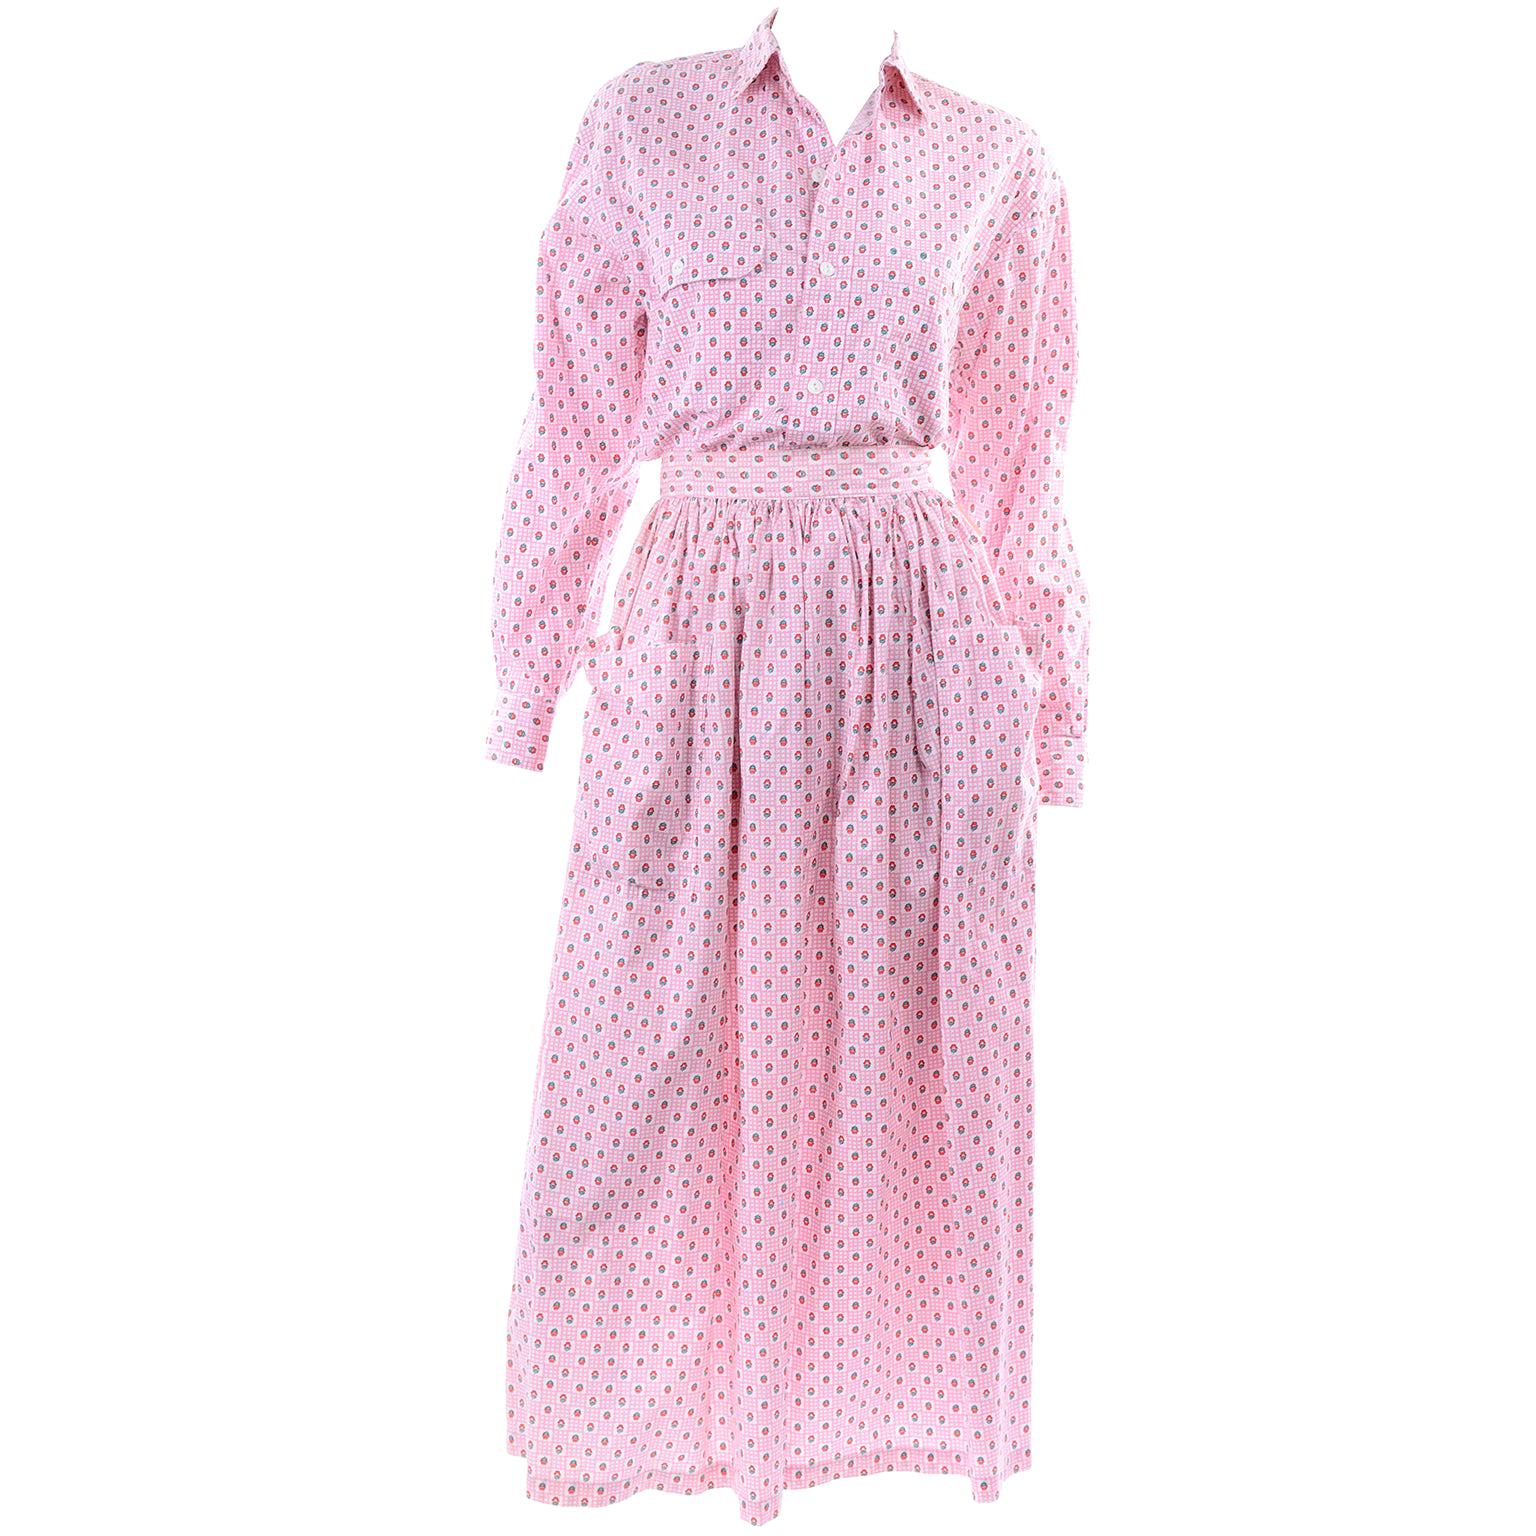 Deadstock New w Tags Vintage Ralph Lauren Pink Floral 2 pc Dress Skirt & Blouse